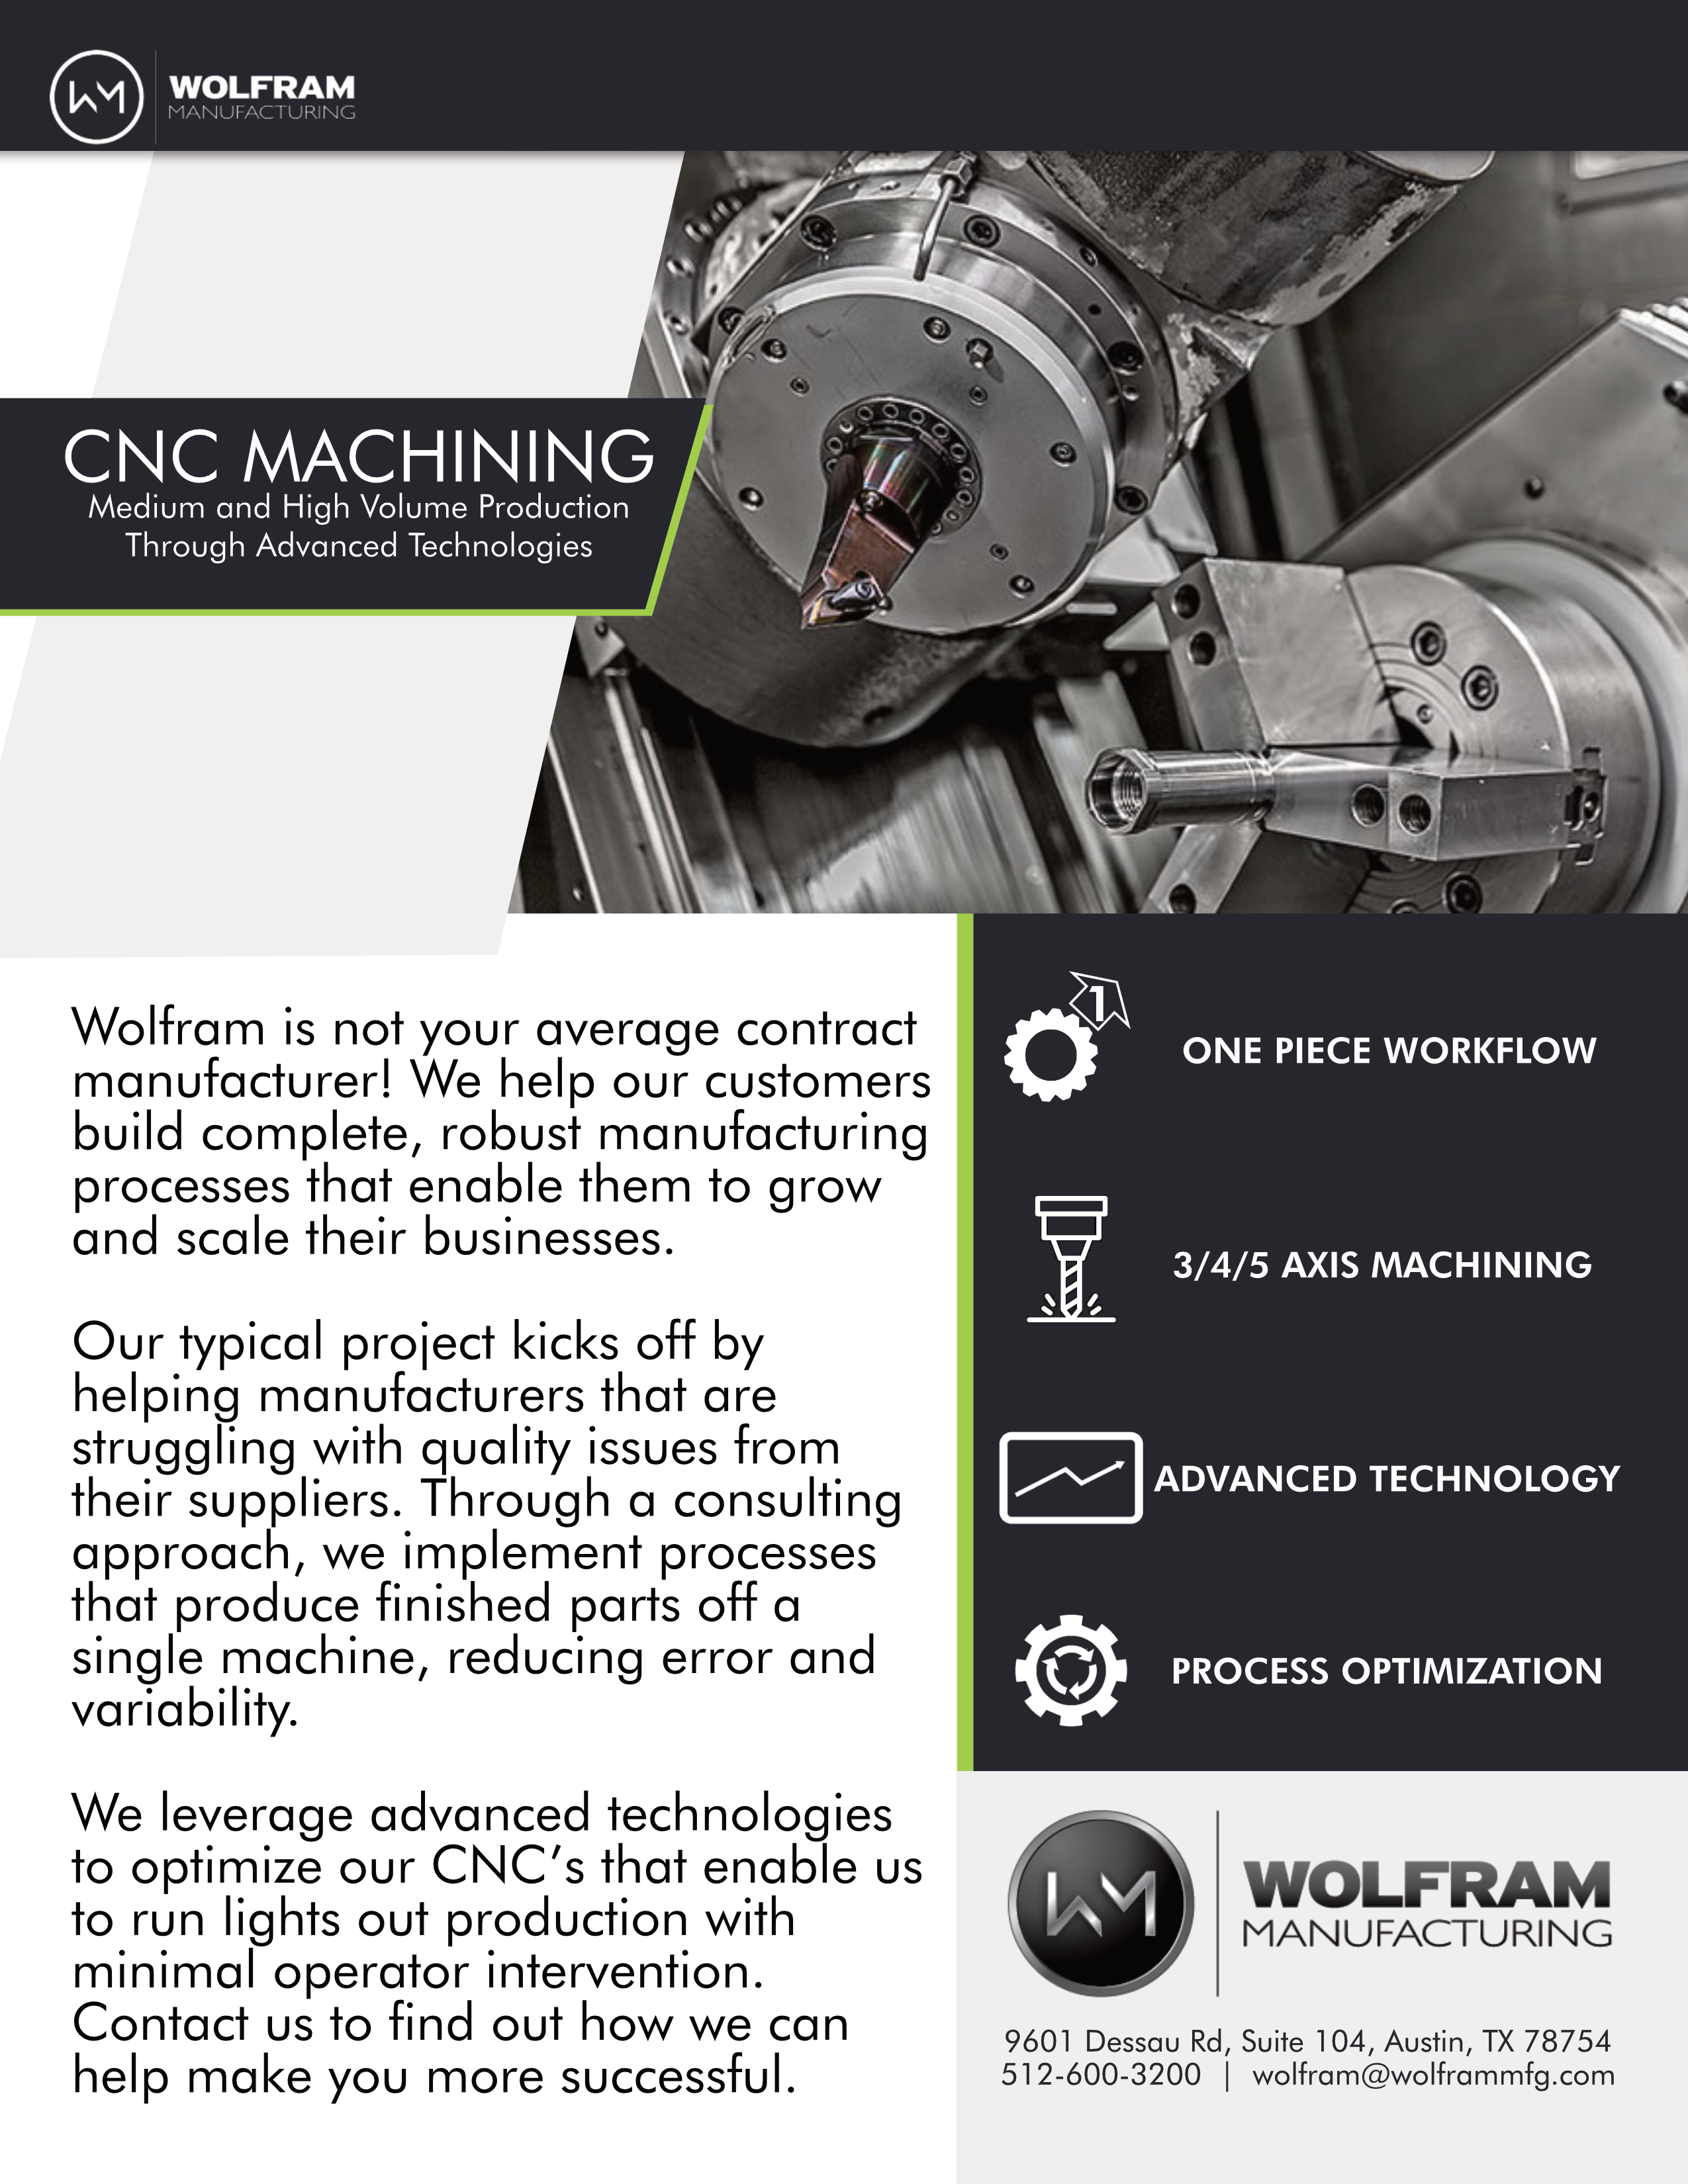 Wolfram Manufacturing CNC Line Card